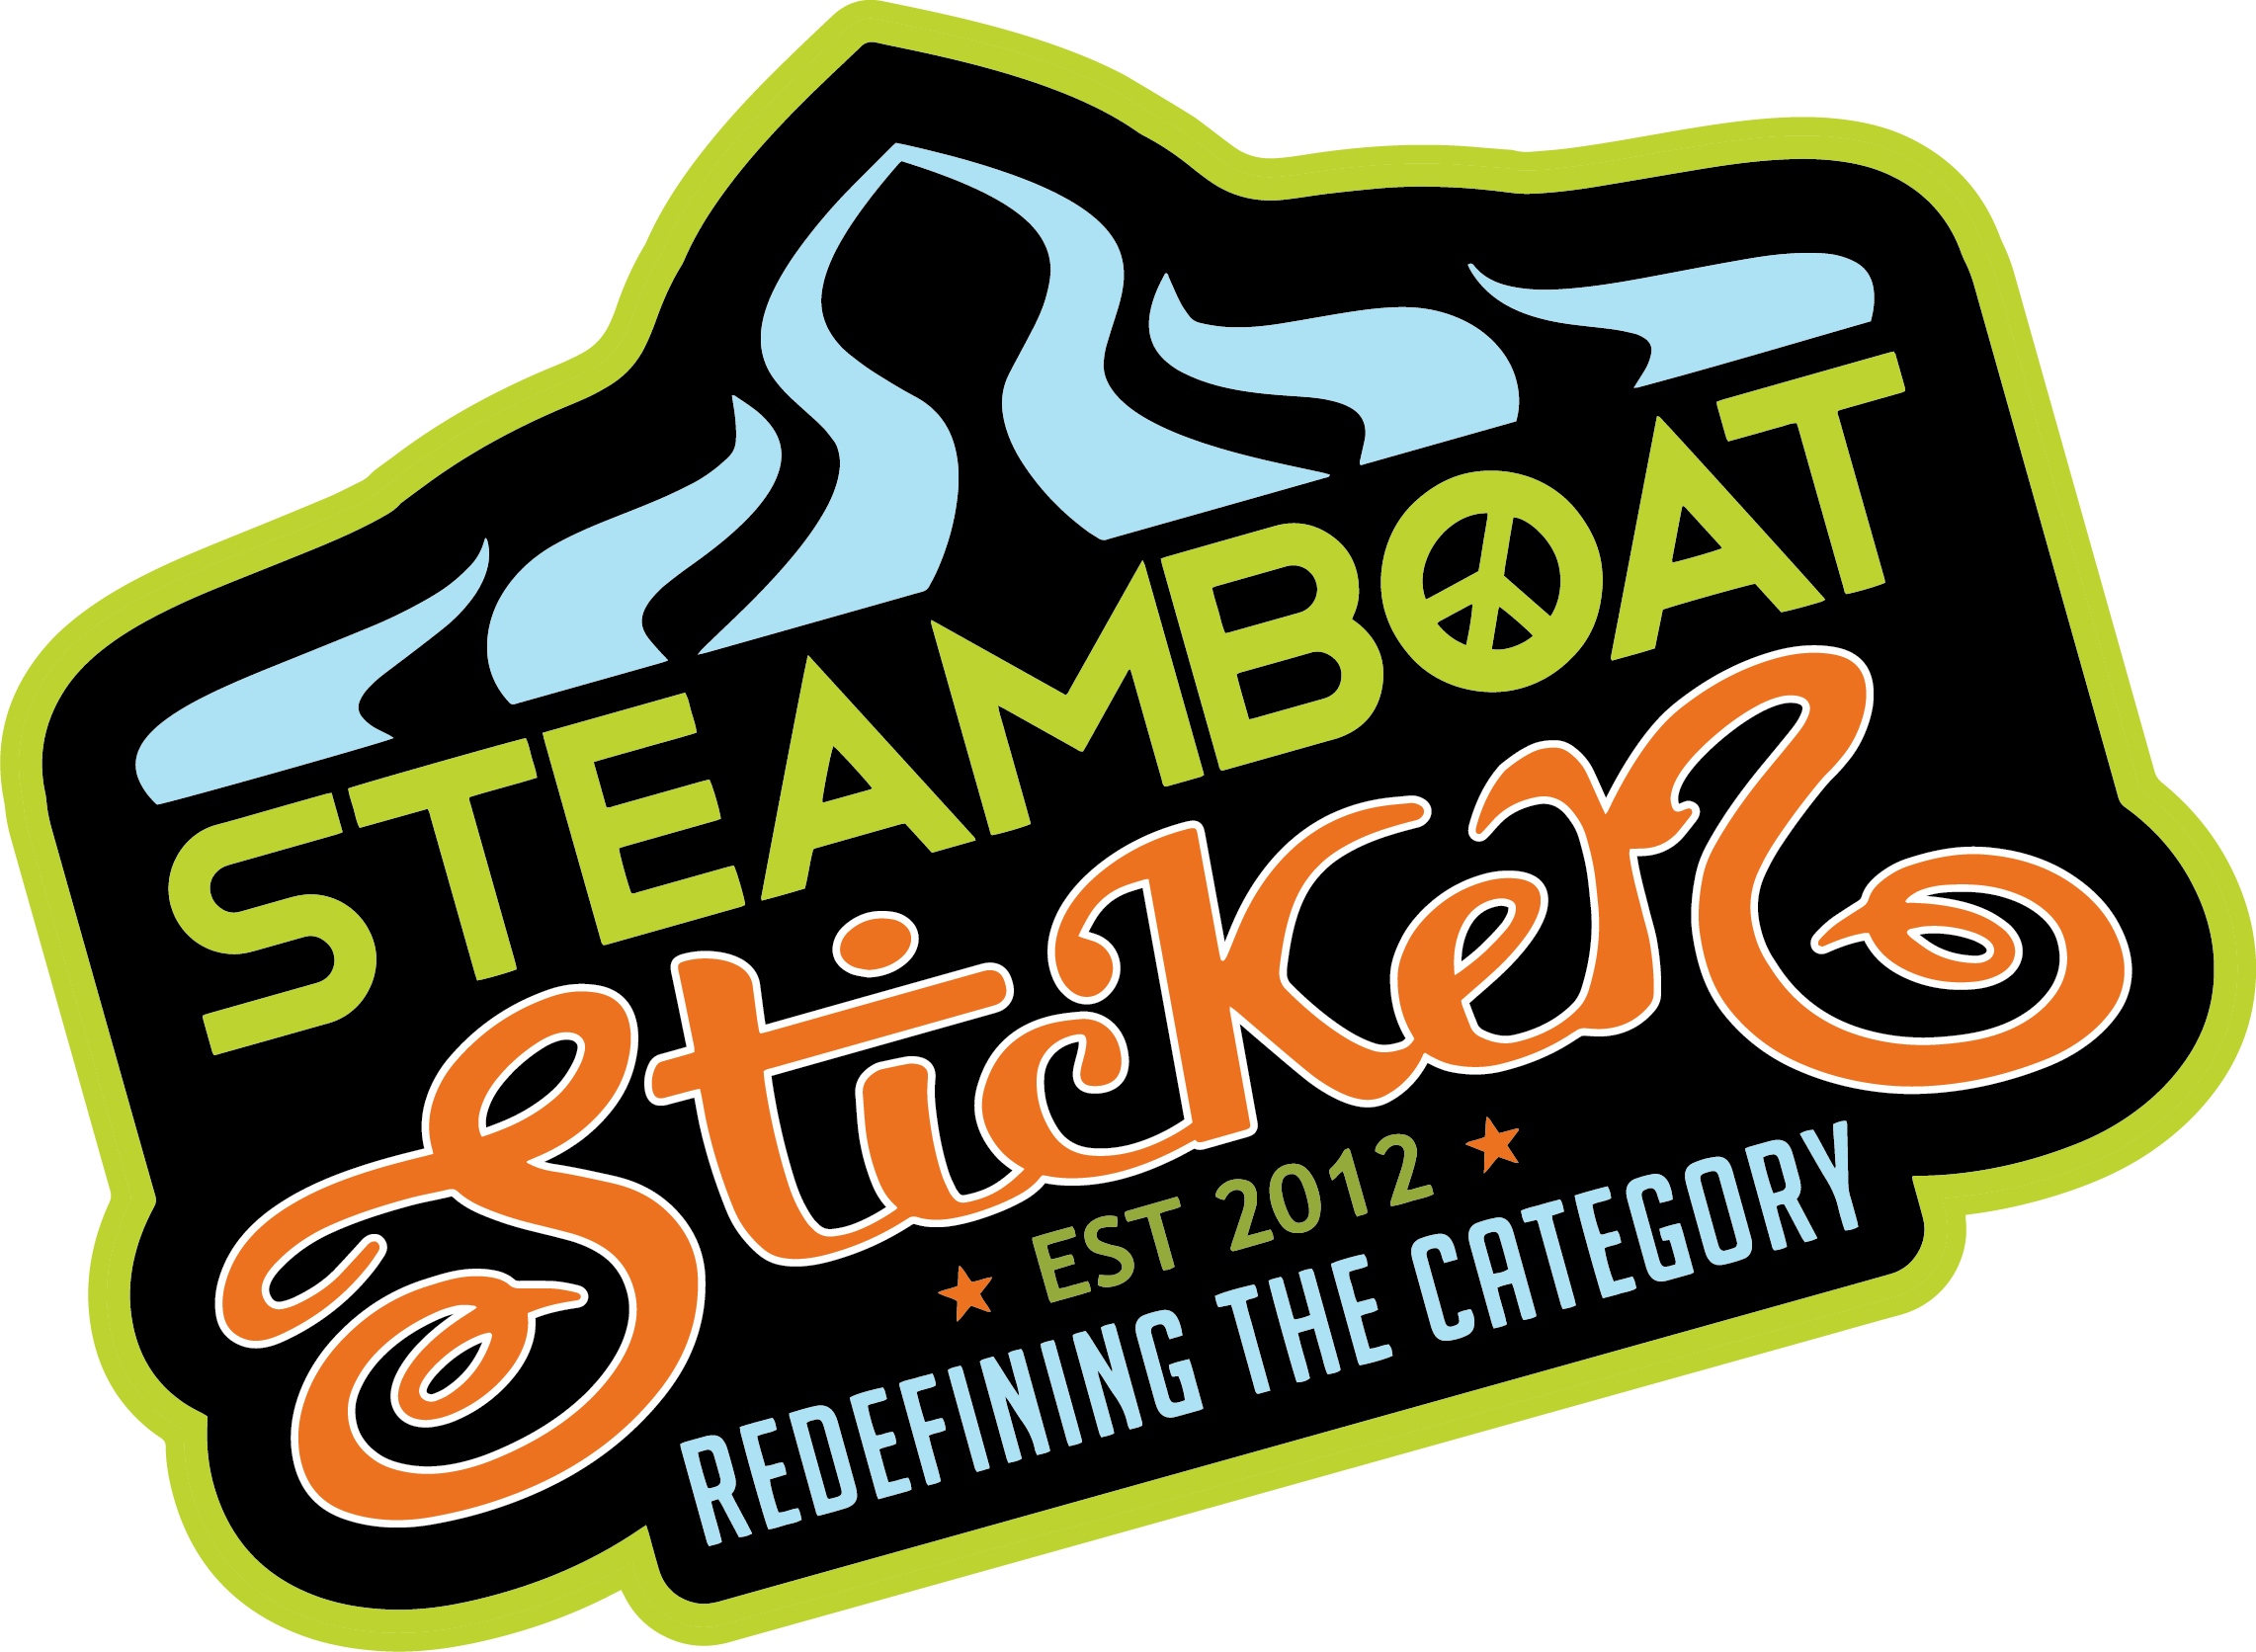 Steamboat Sticker